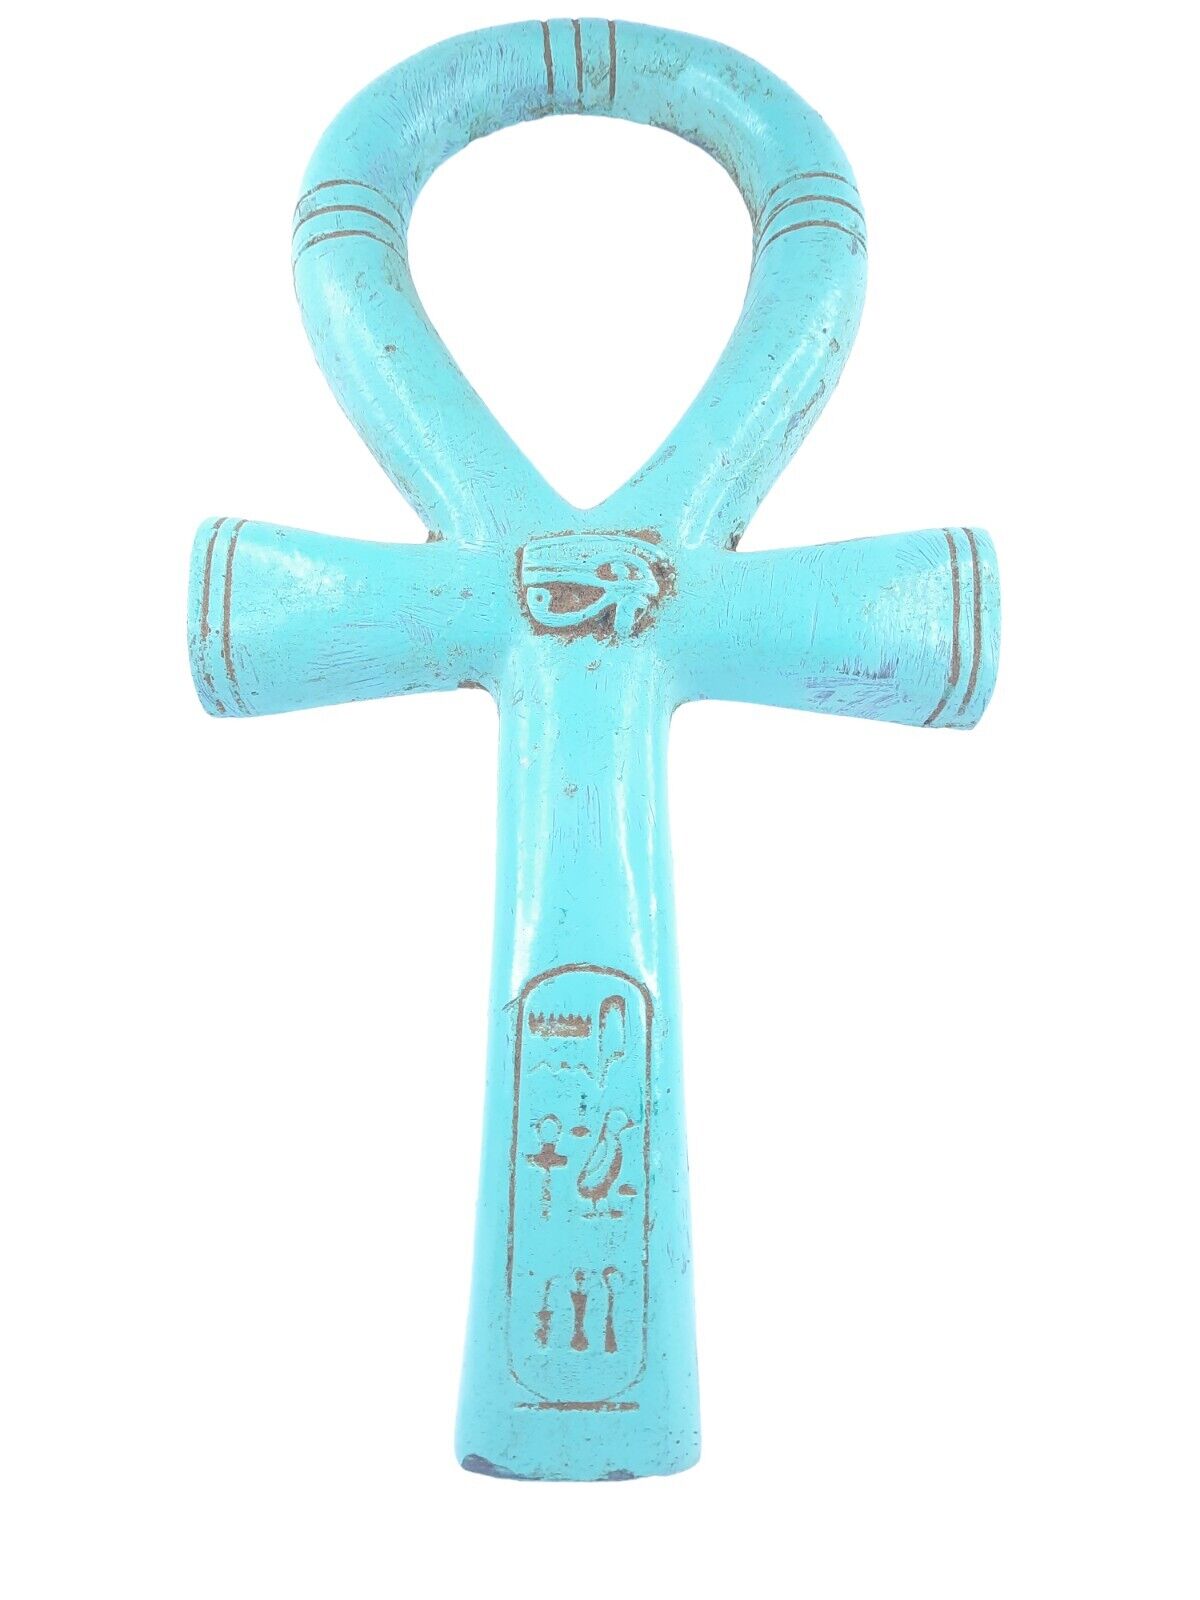 UNIQUE ANTIQUE ANCIENT EGYPTIAN Key of Life Symbol Eye of Horus Hieroglyphic